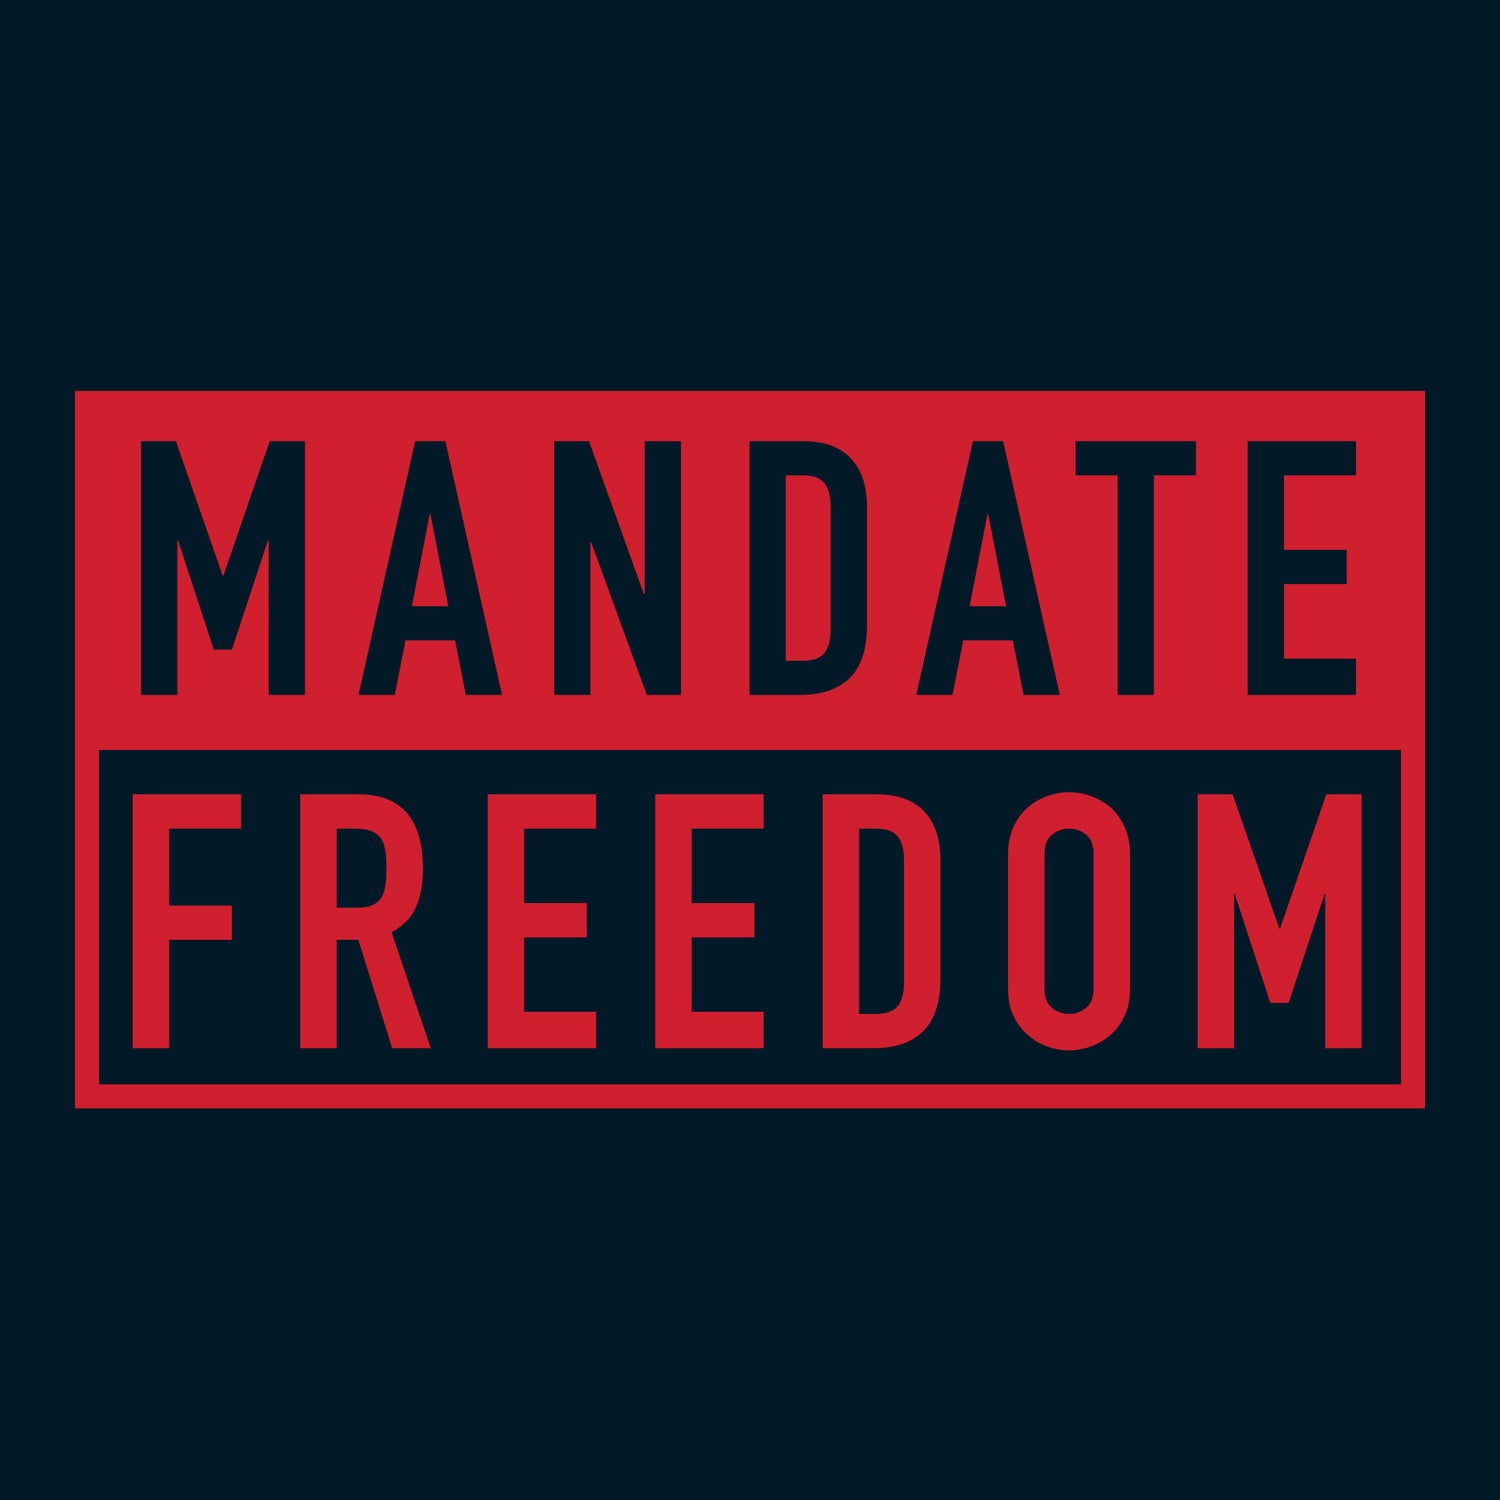 Mandate Freedom Graphic | Grunt Style 